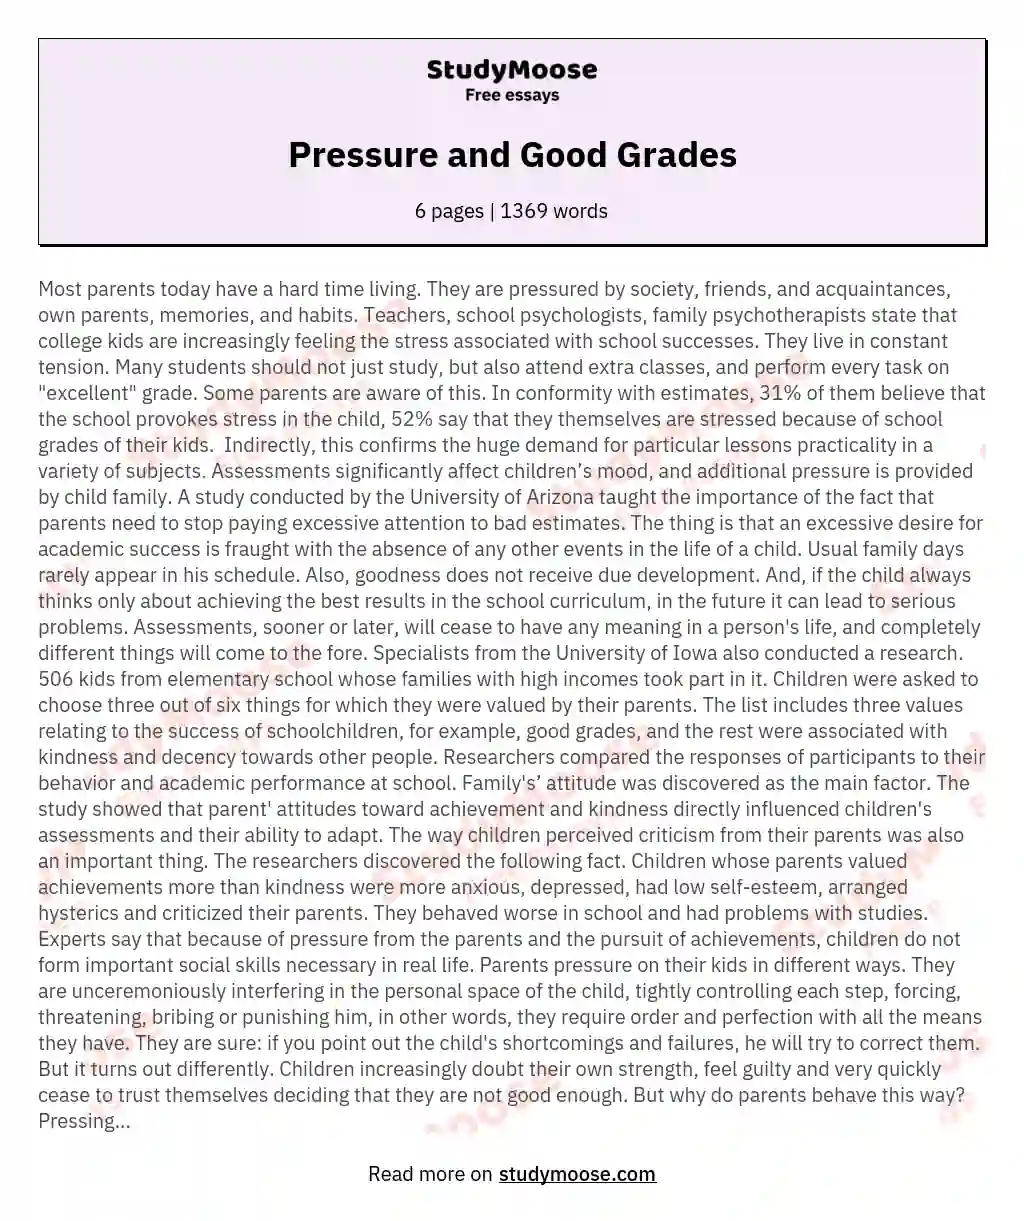 Pressure and Good Grades